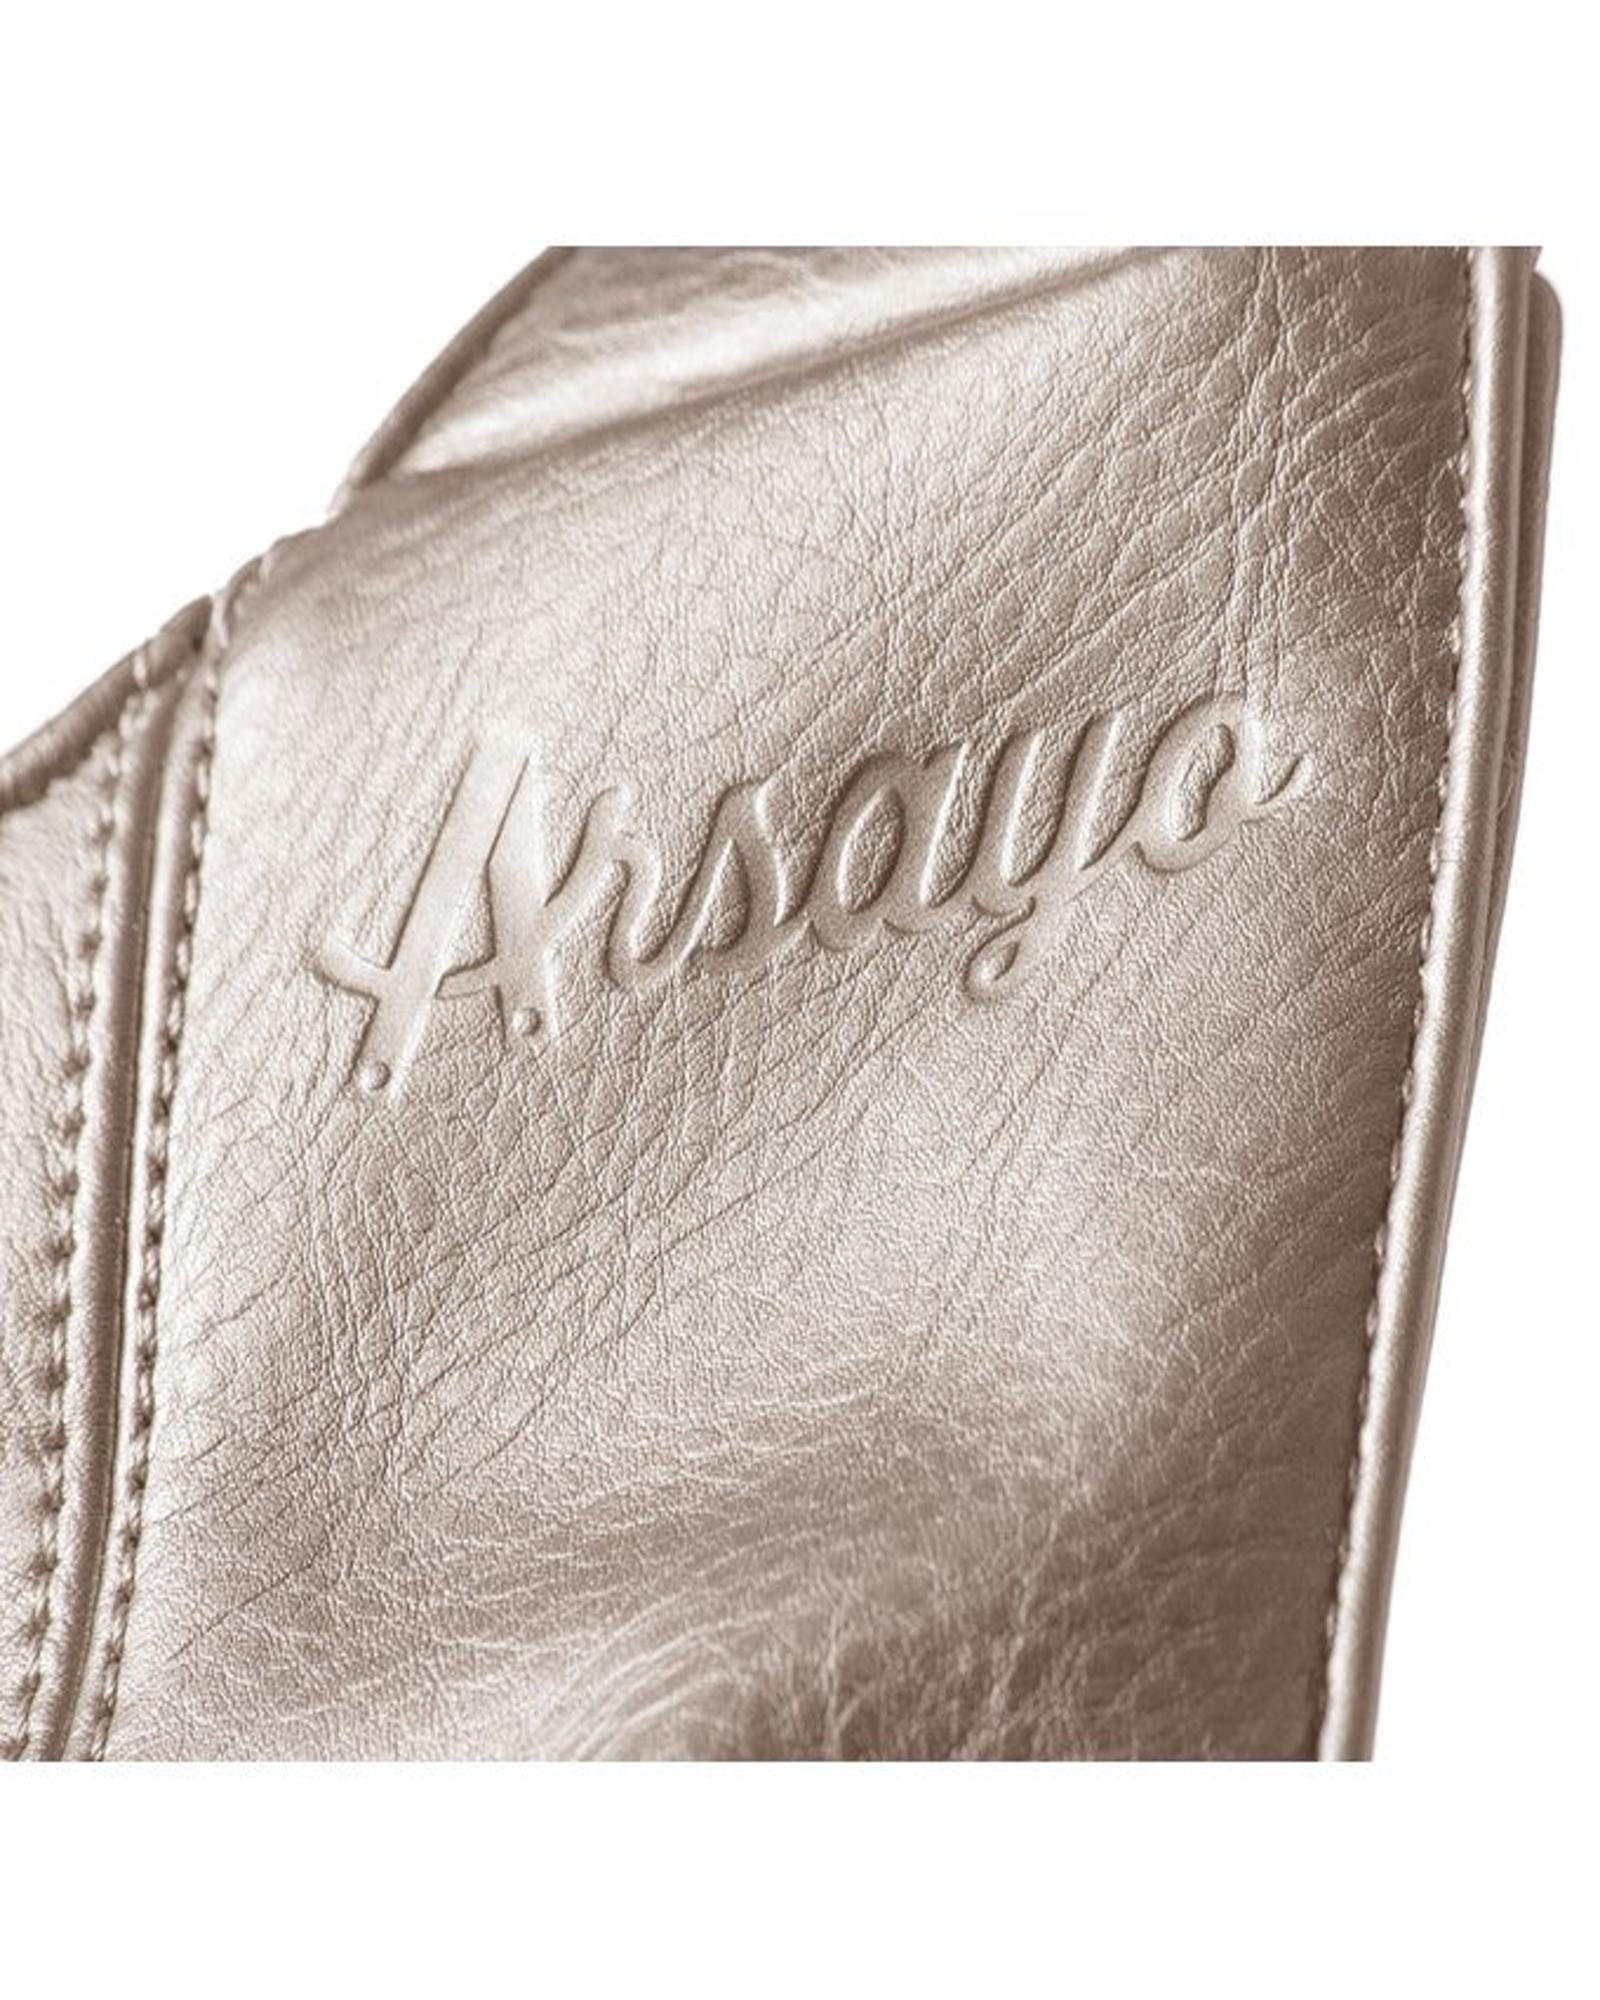 ARSAYO - ARSAYO Original Backpack | Champagne Metallic